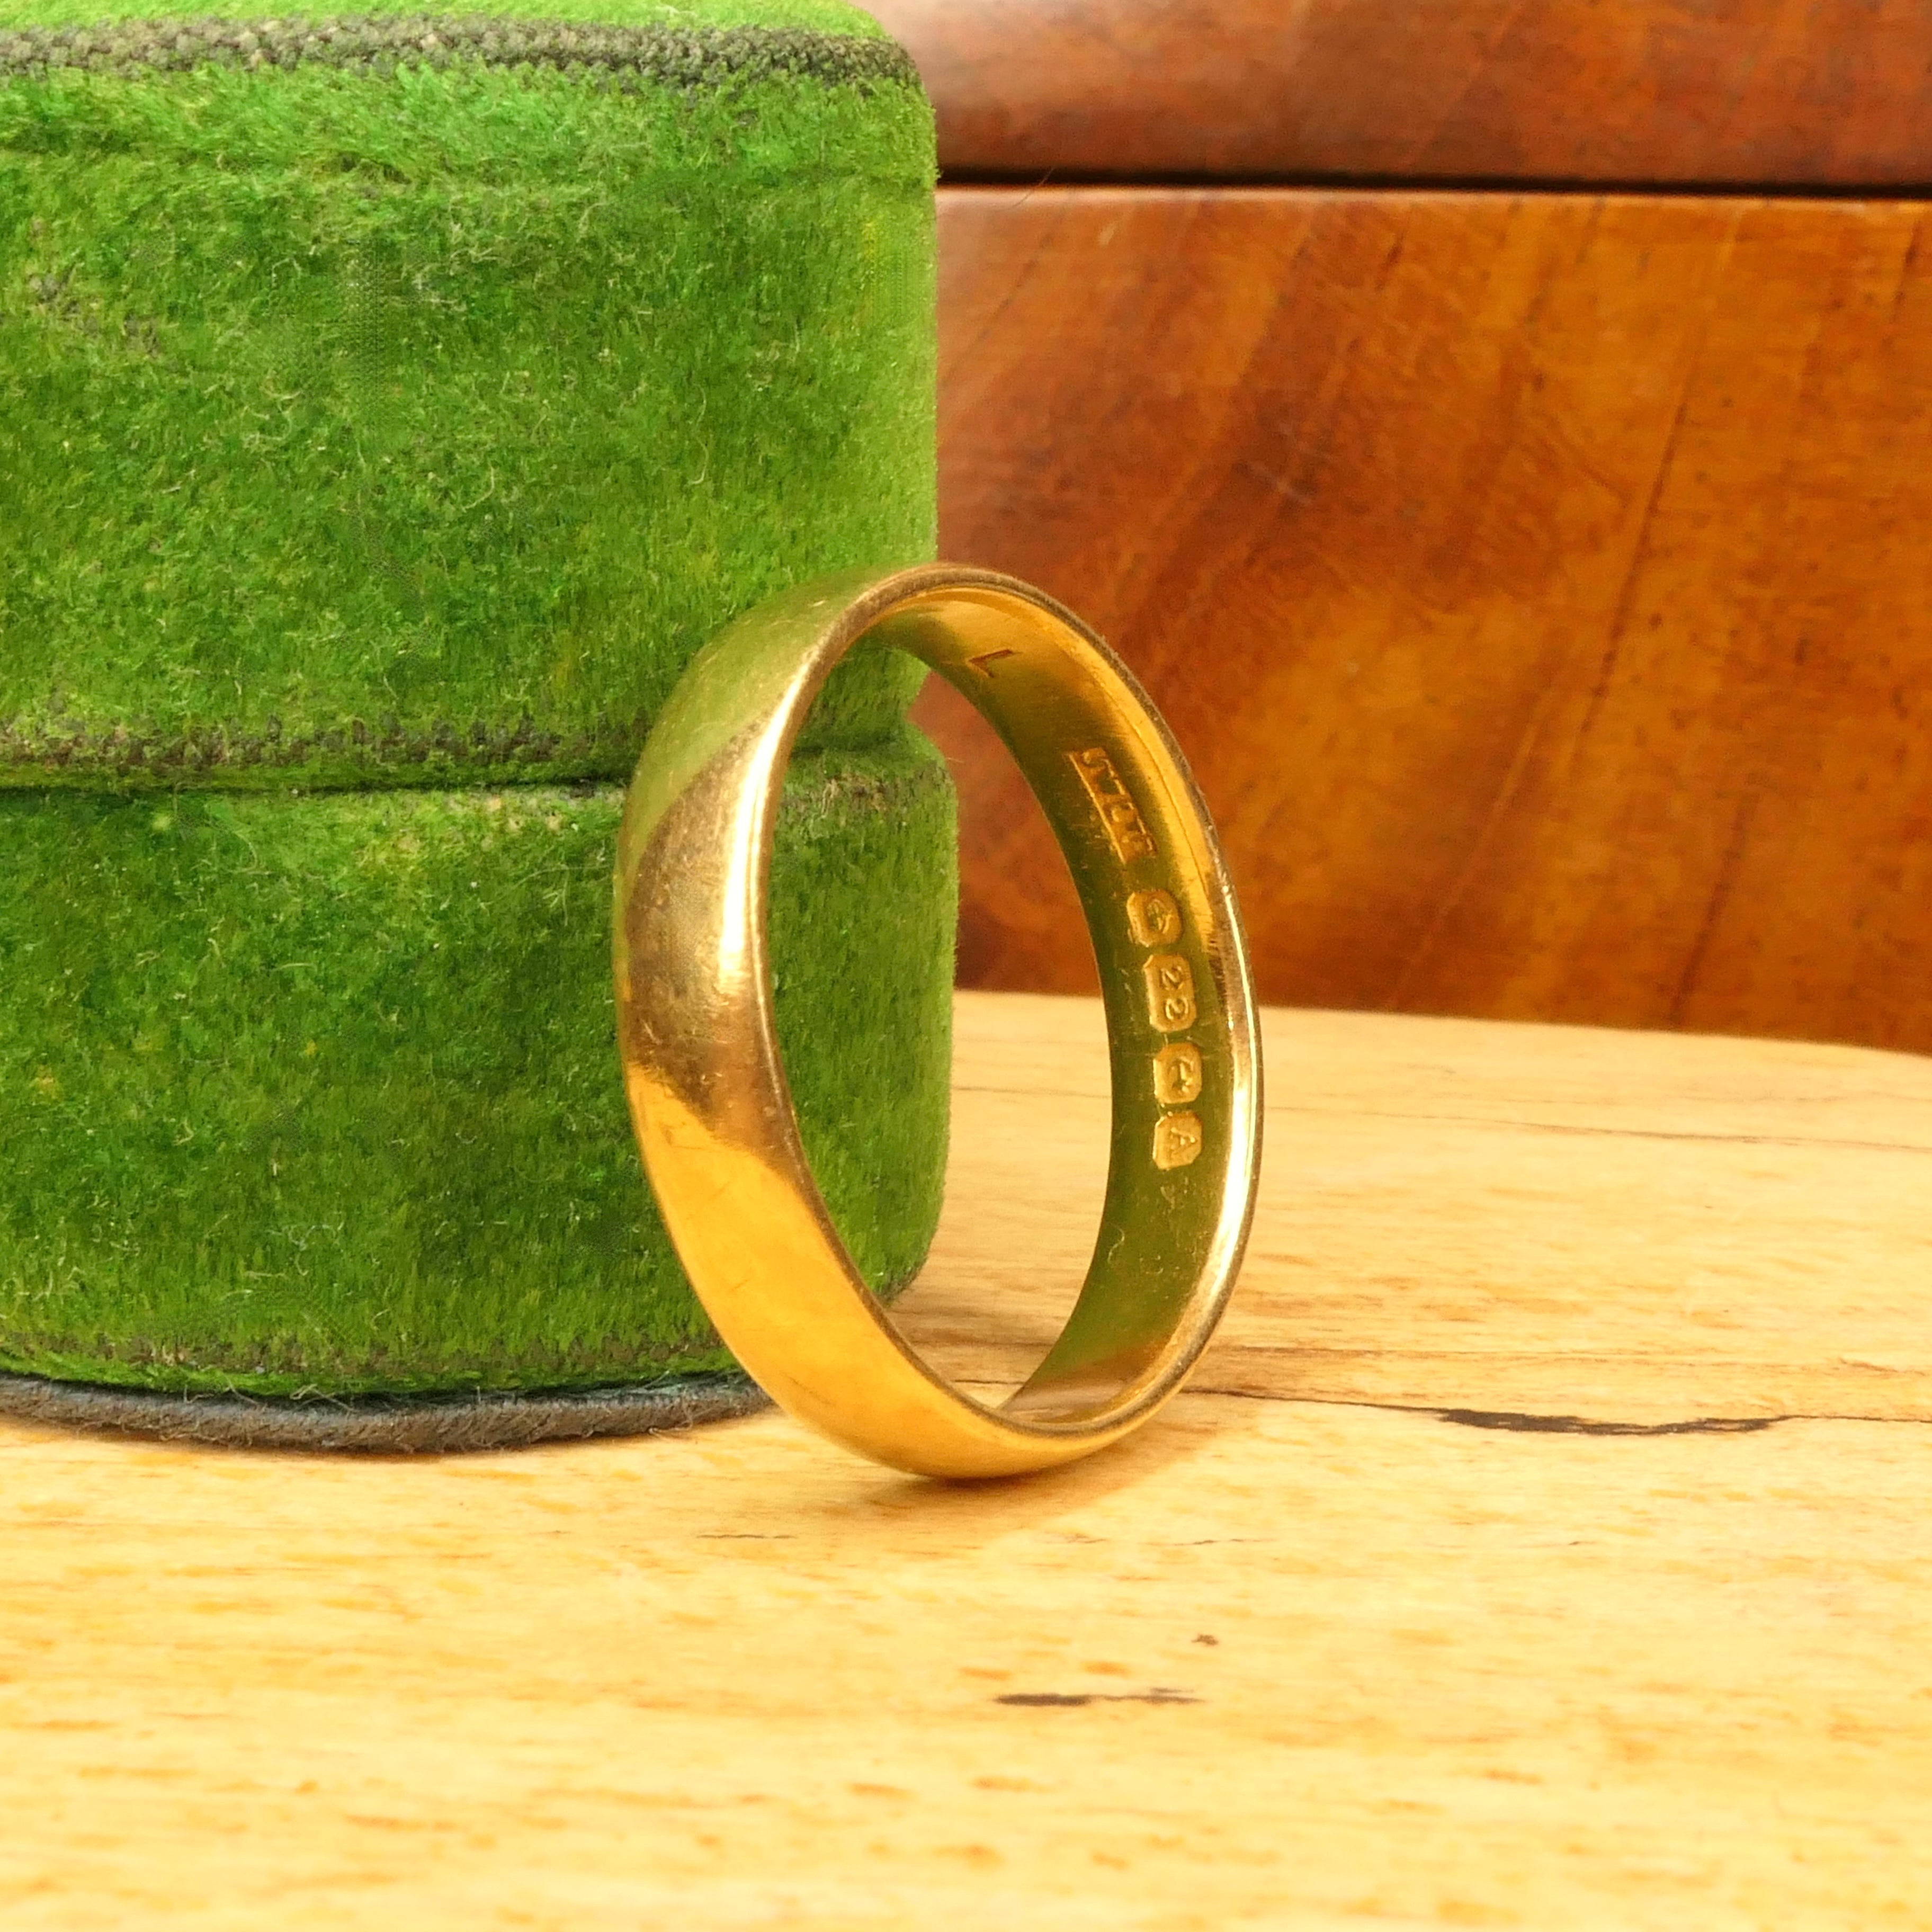 Vintage, 1920s, 22ct gold wedding band ring